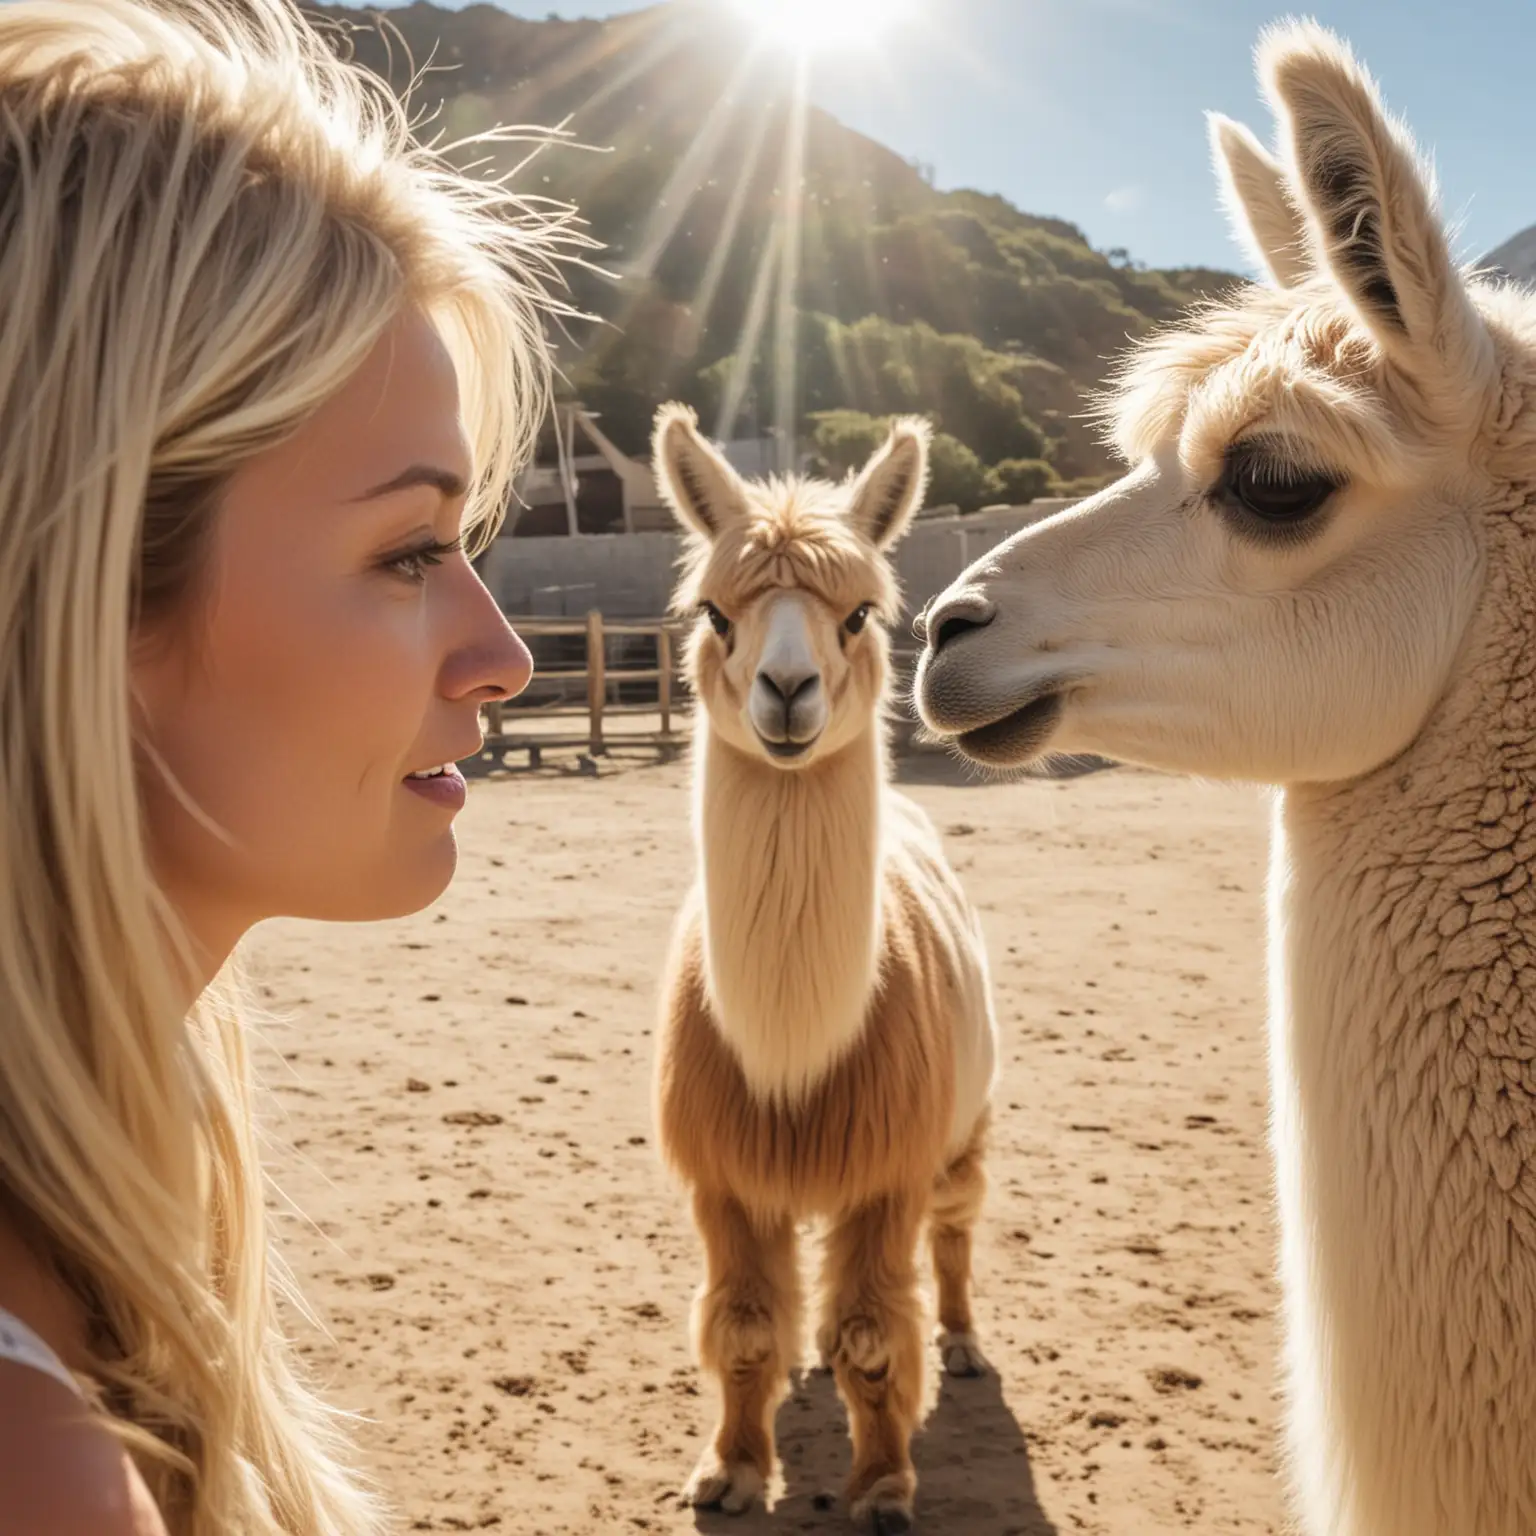 Blonde Woman Meeting a Llama Under Midday Sun